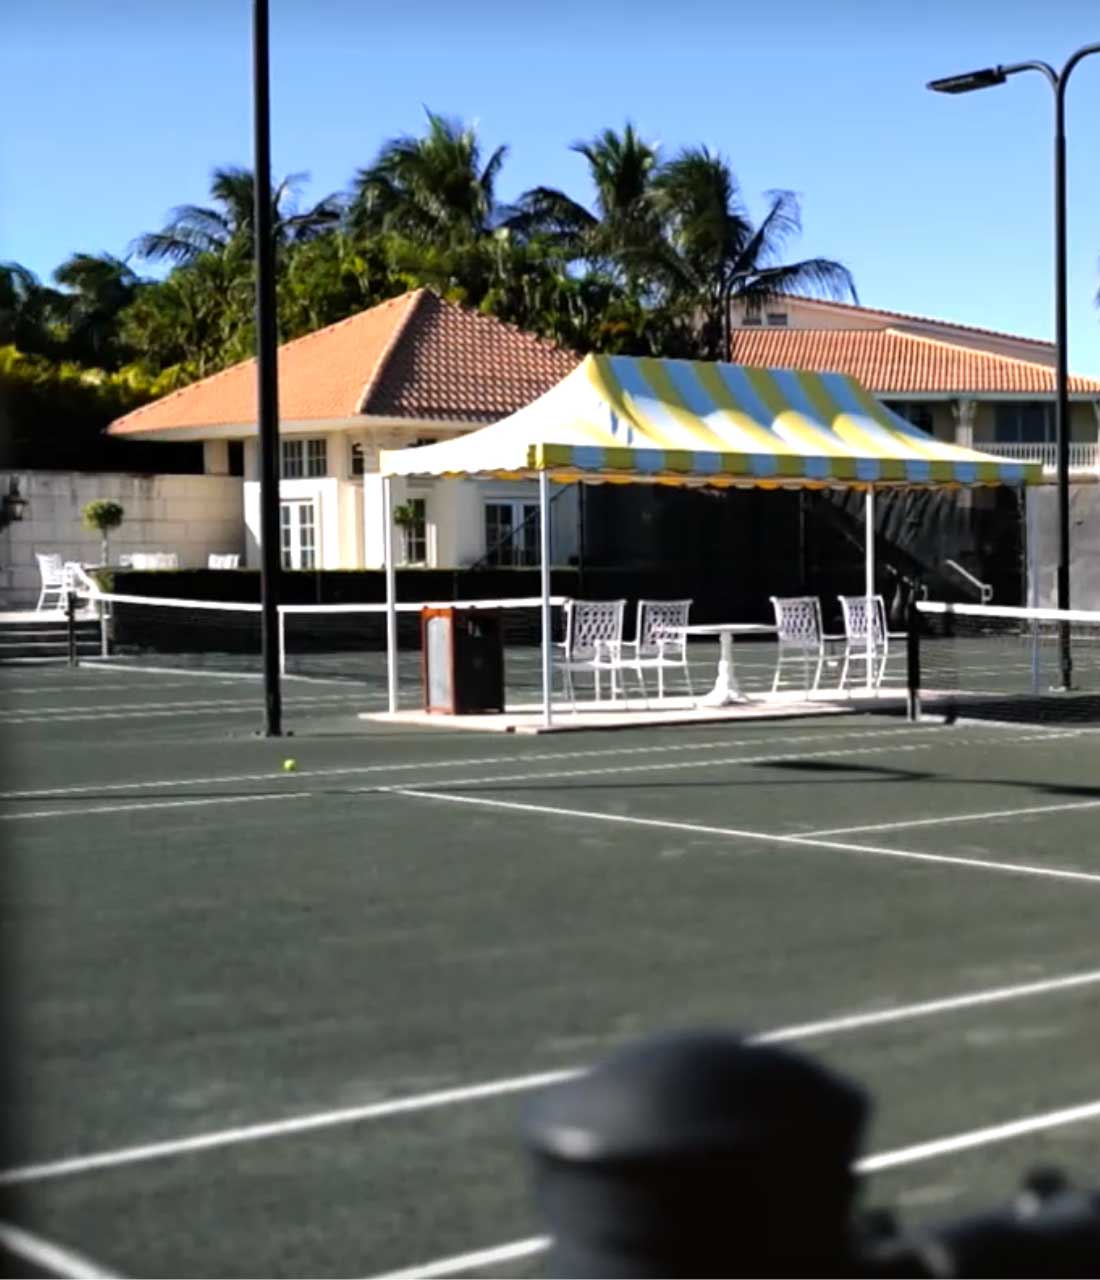 Luxury Wellness Center in Miami, FL Location with Tennis